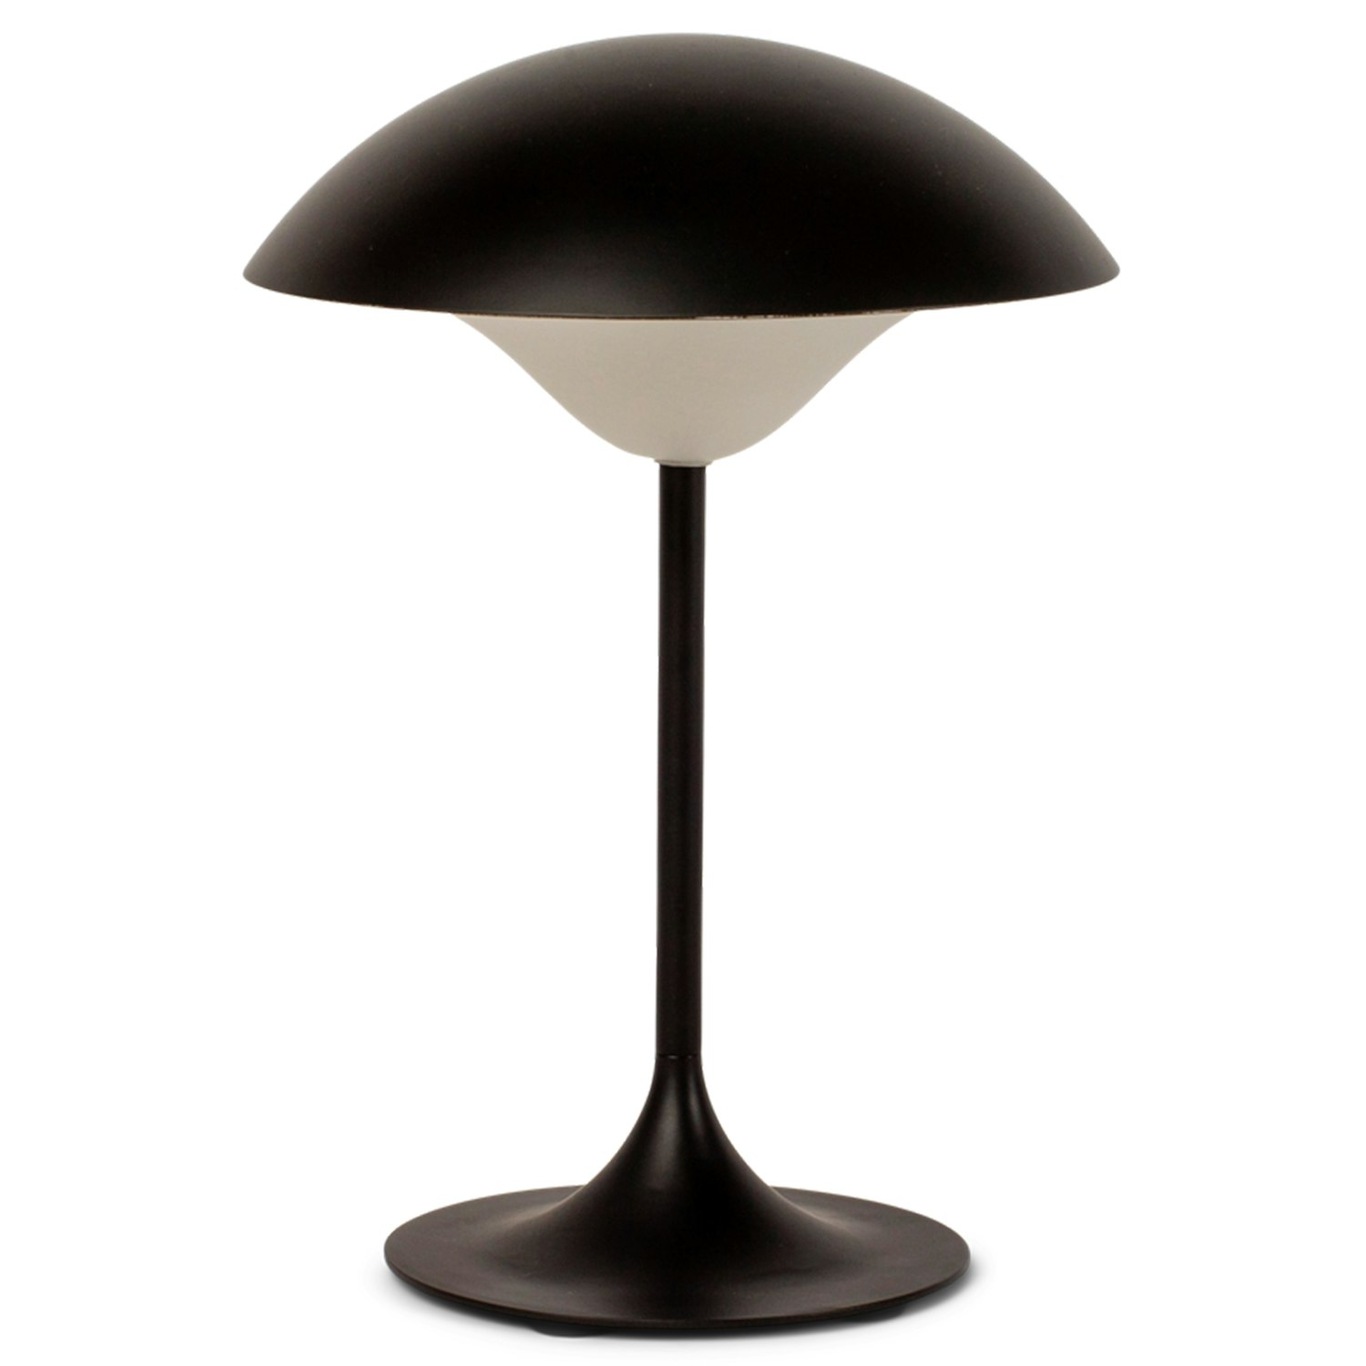 https://royaldesign.com/image/2/spring-copenhagen-eclipse-portabel-bordslampa-led-charcoal-1?w=800&quality=80